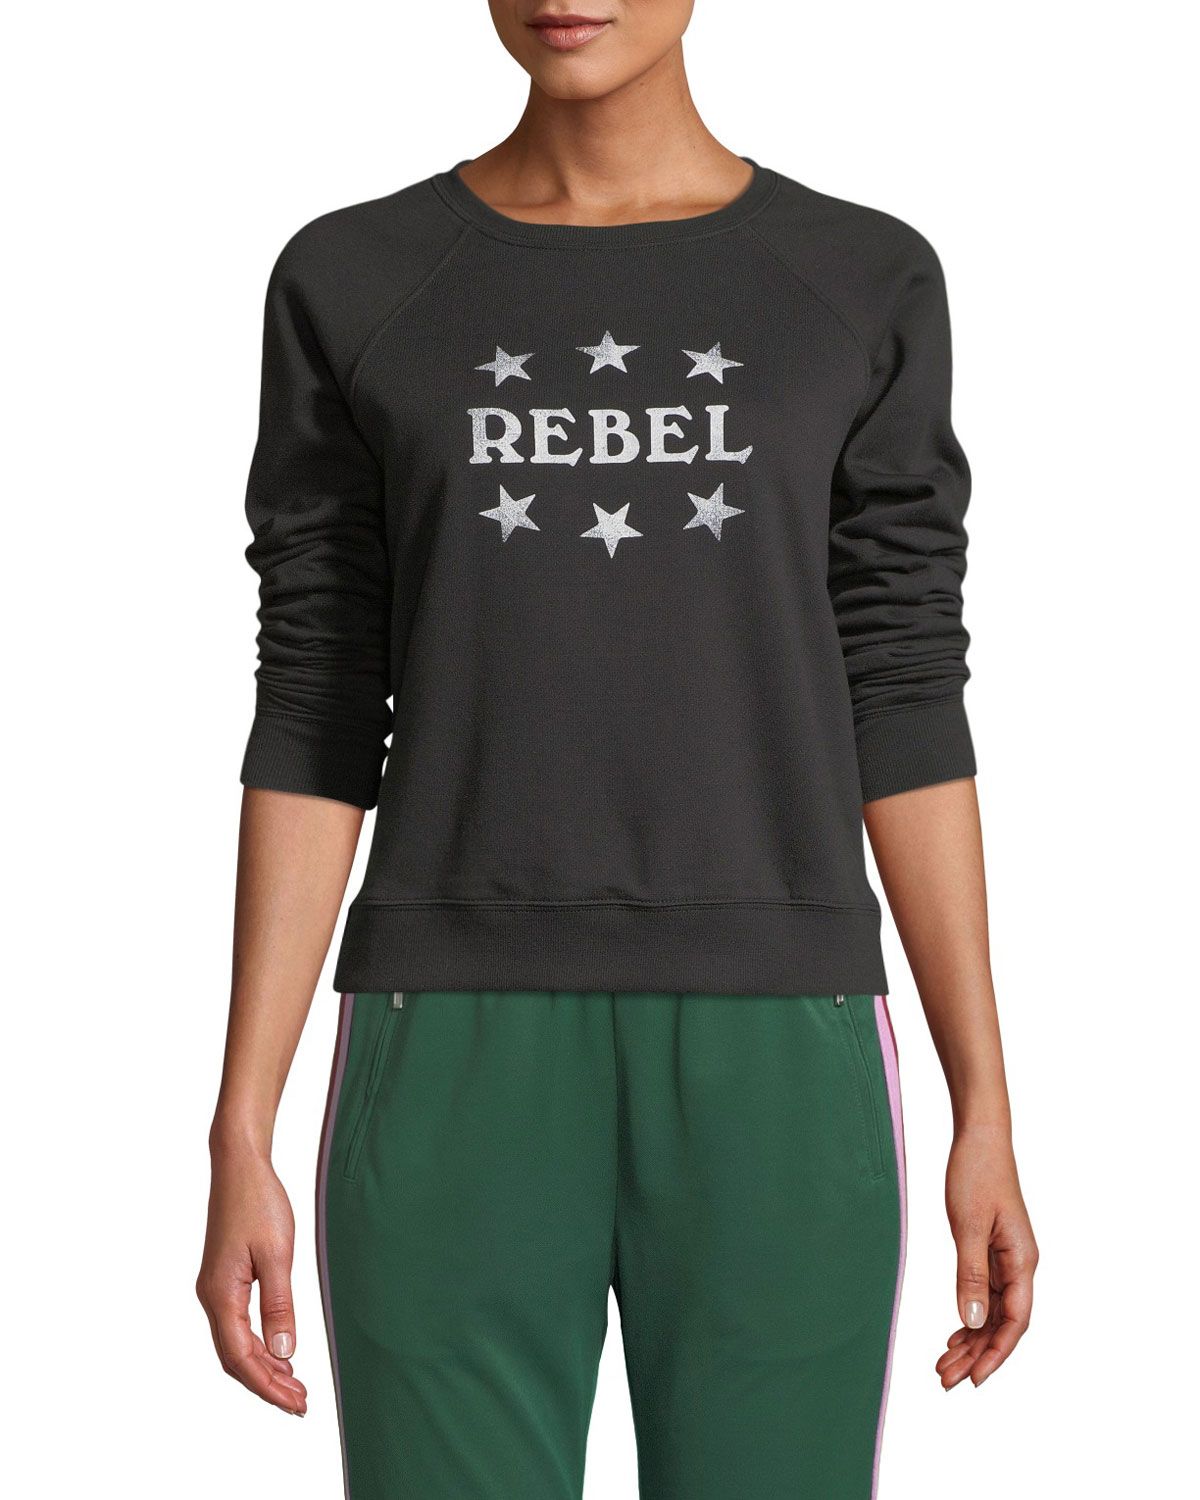 Jennings "Rebel" Sweatshirt | Neiman Marcus